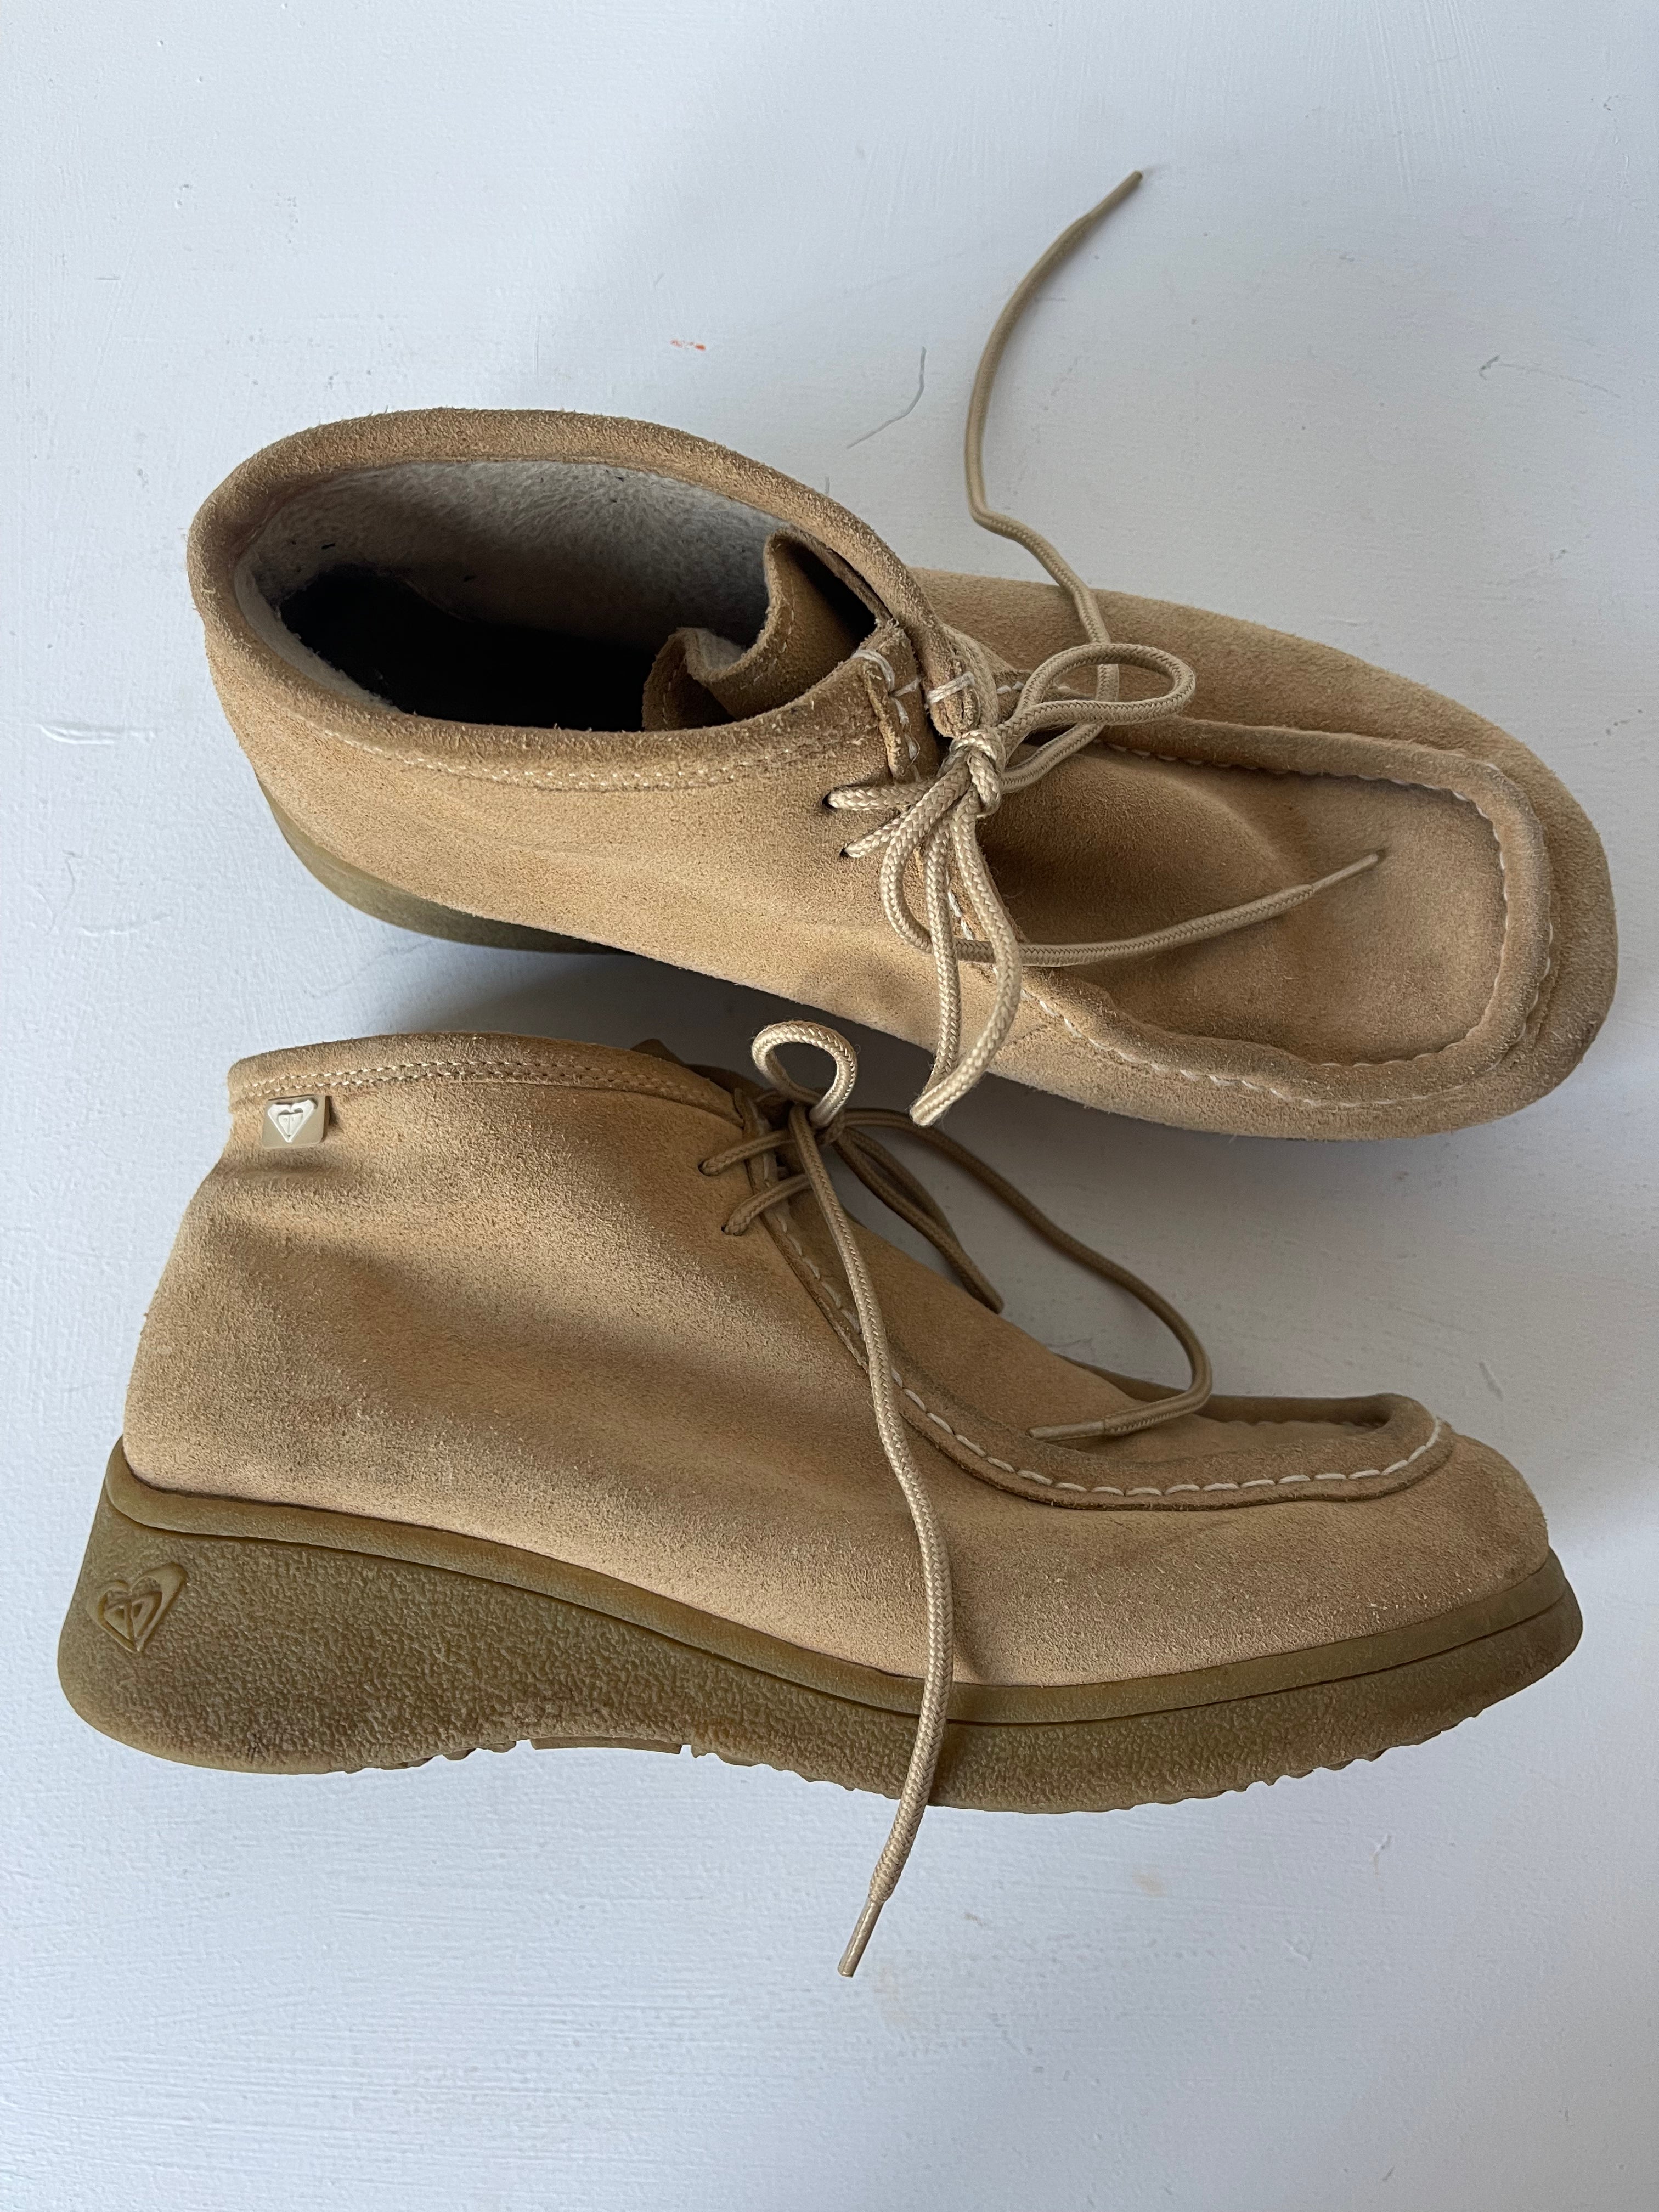 Vintage Roxy Suede Boots (9)